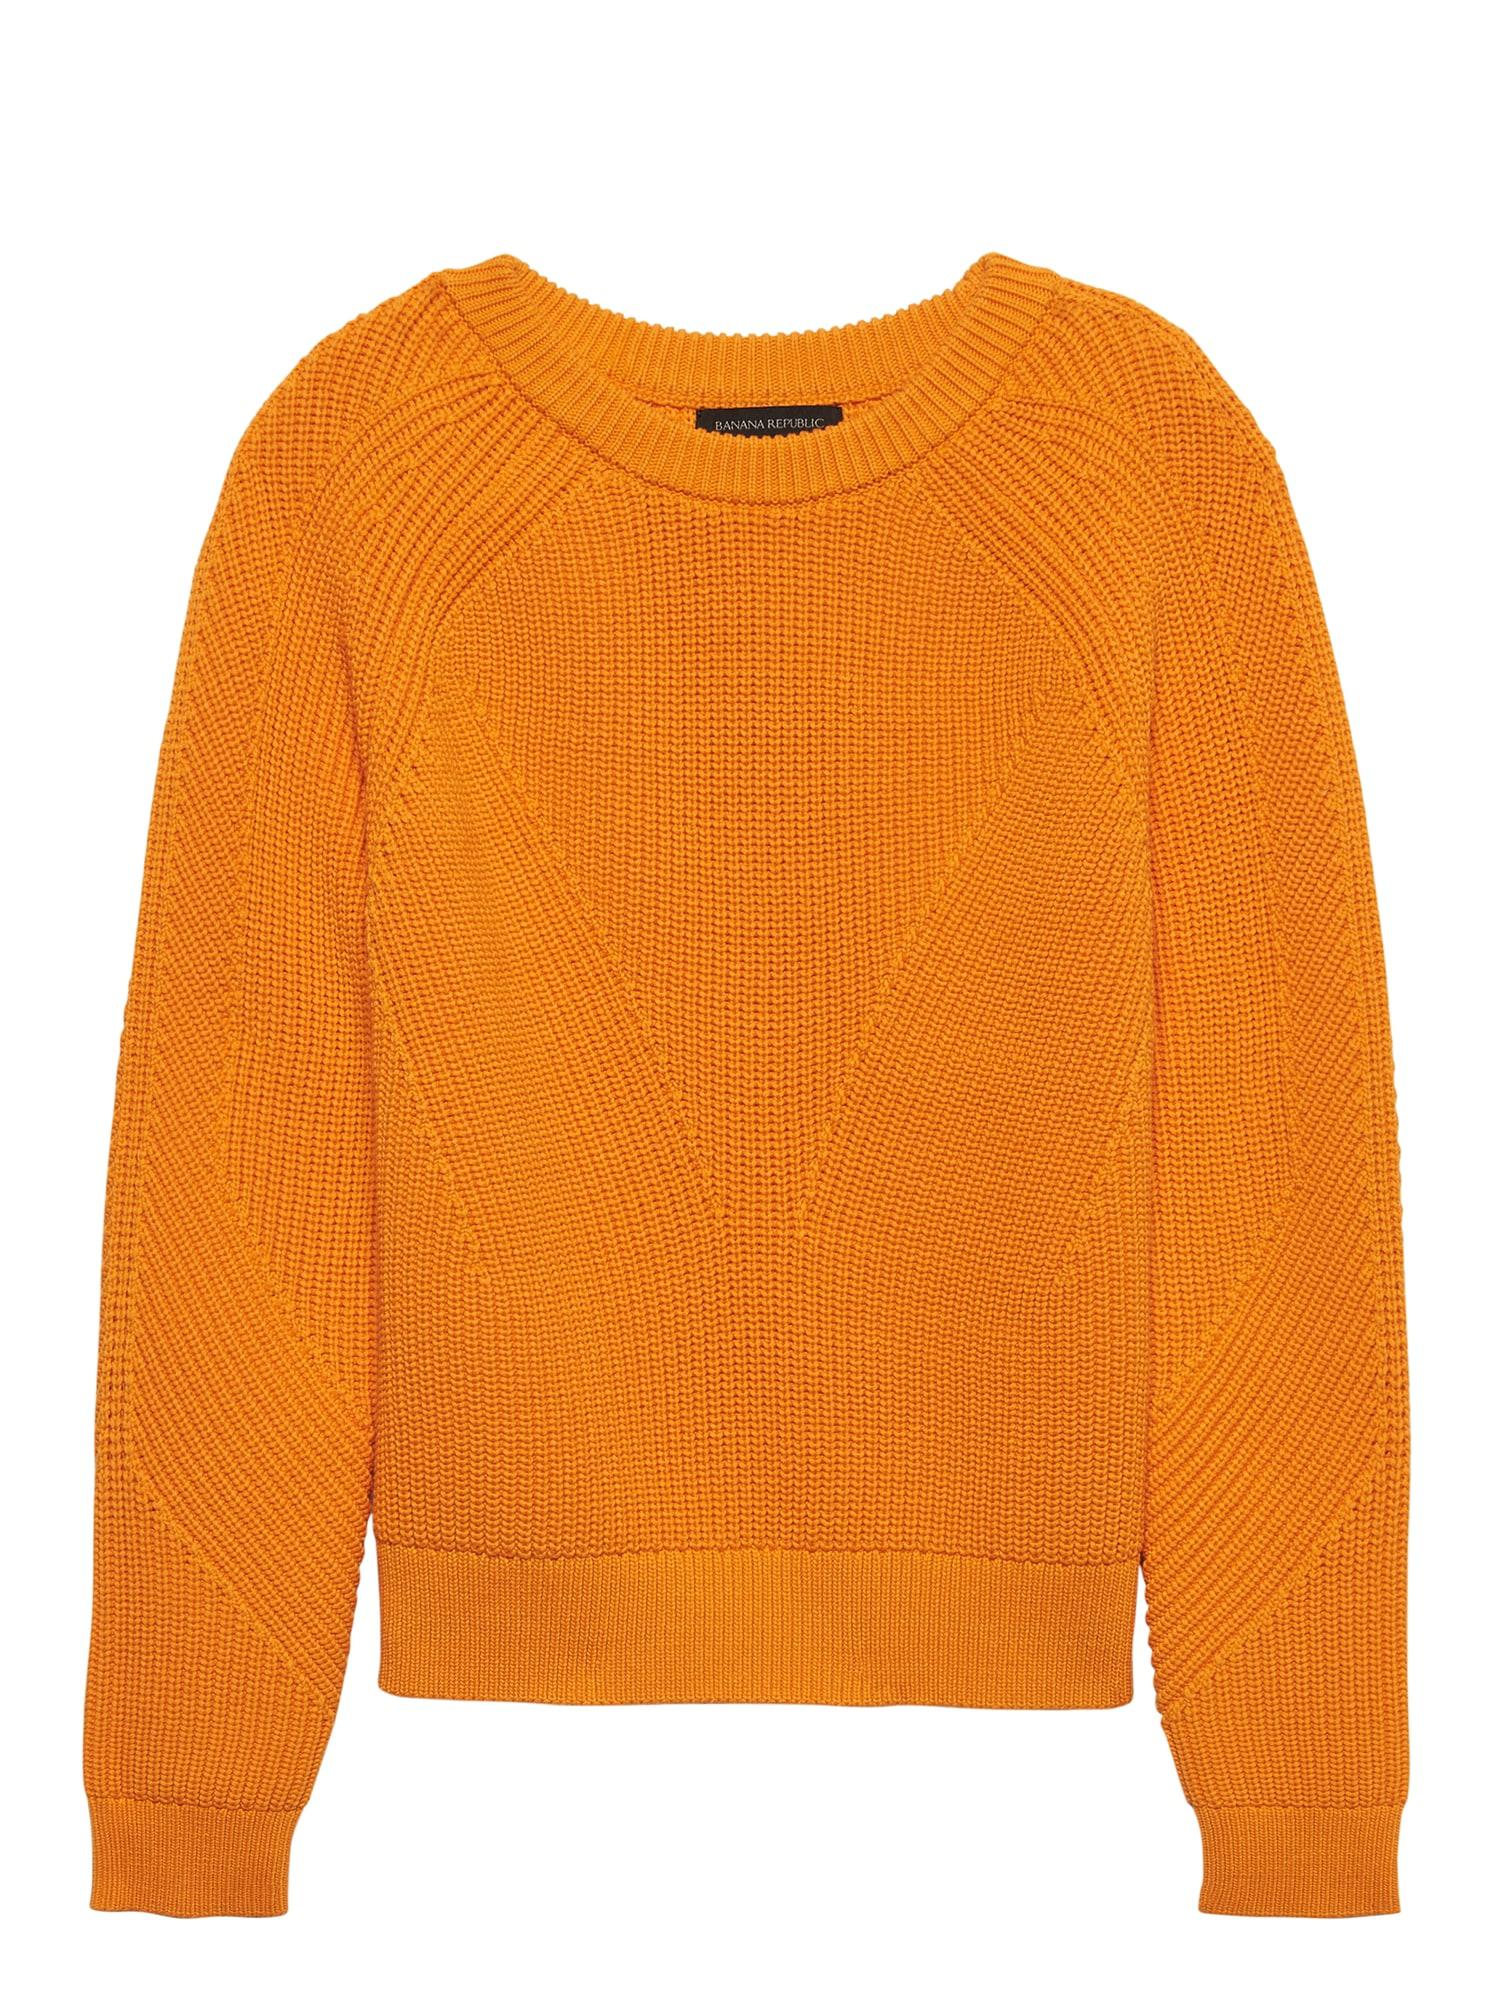 Lyst - Banana Republic Chunky Ribbed Crew-neck Sweater in Orange